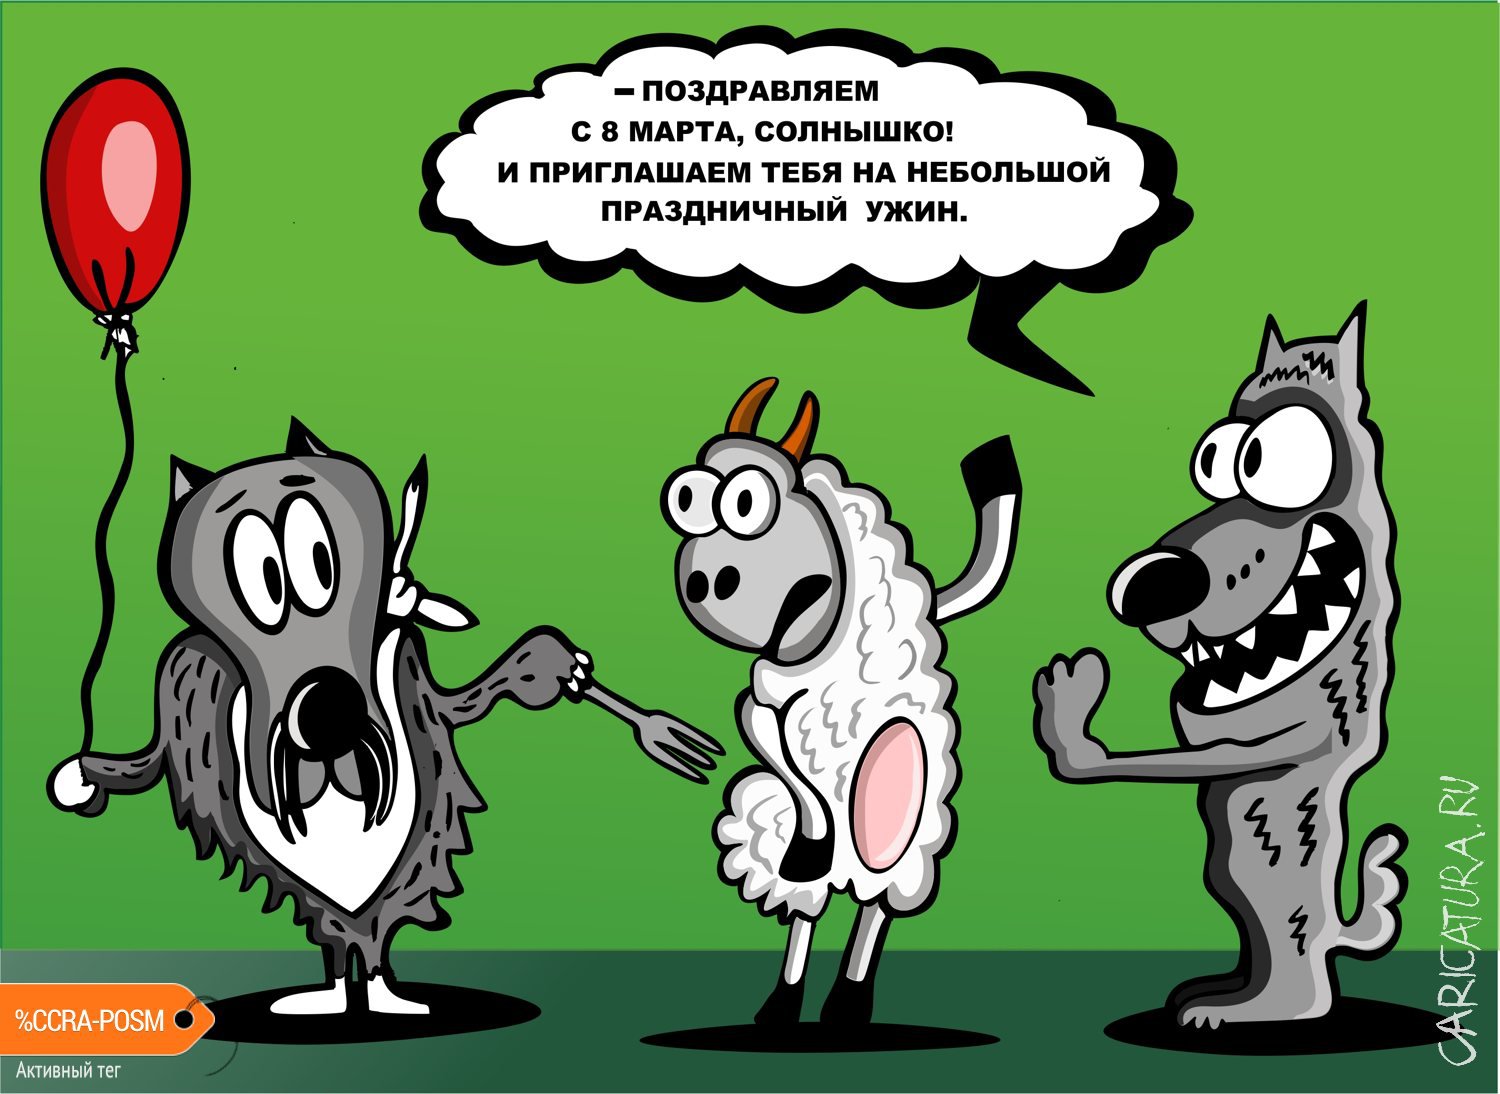 Карикатура "Праздничный ужин", Евгений Коровкин